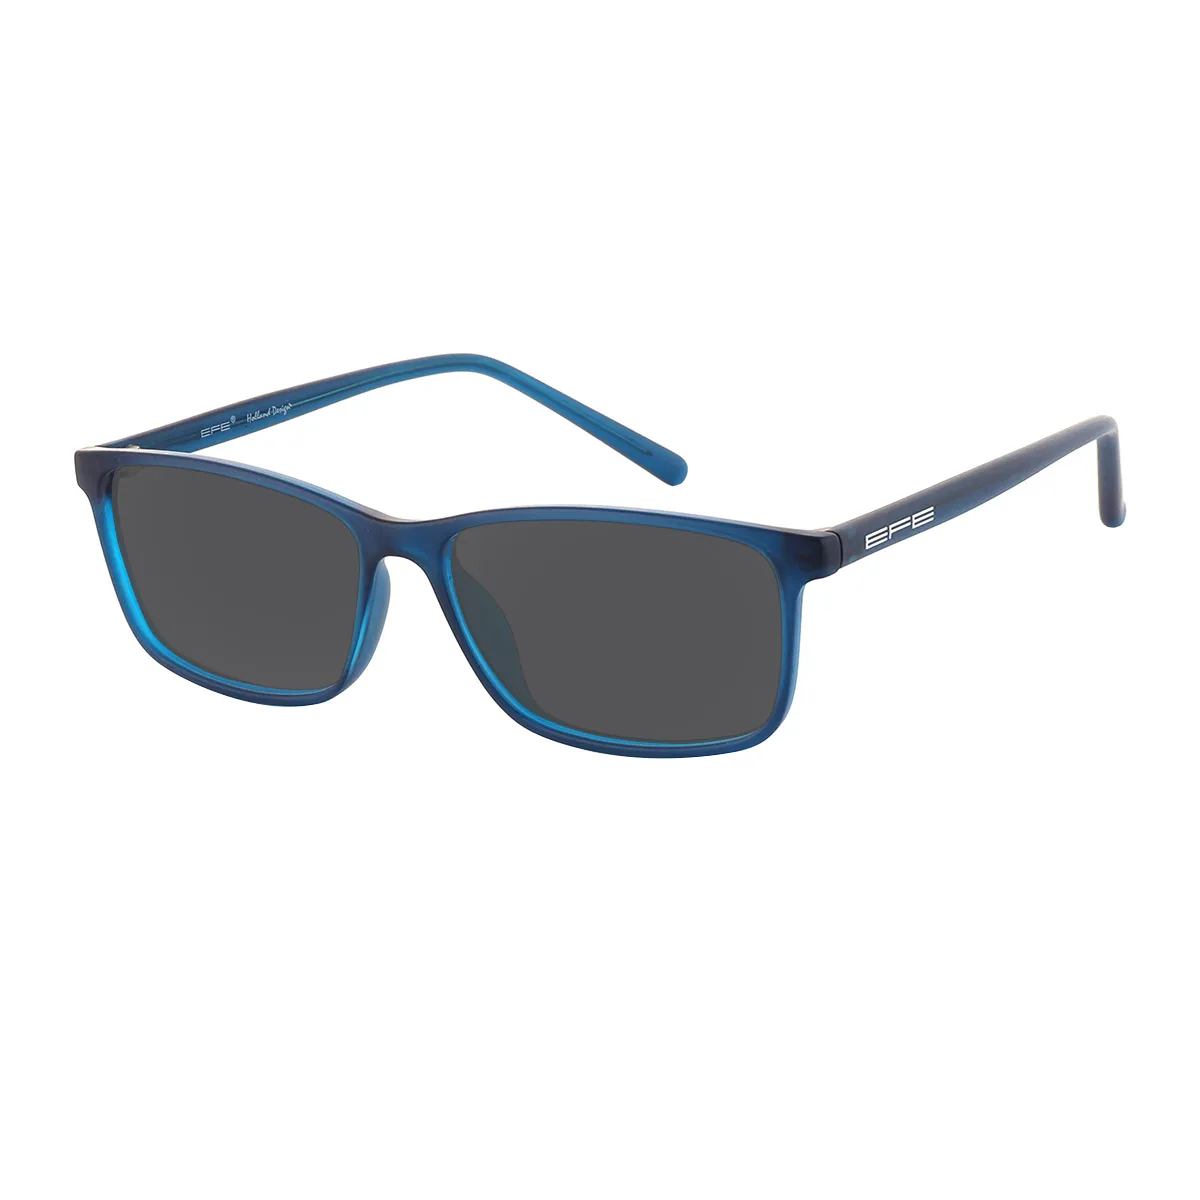 Garland - Rectangle Blue Sunglasses for Men & Women